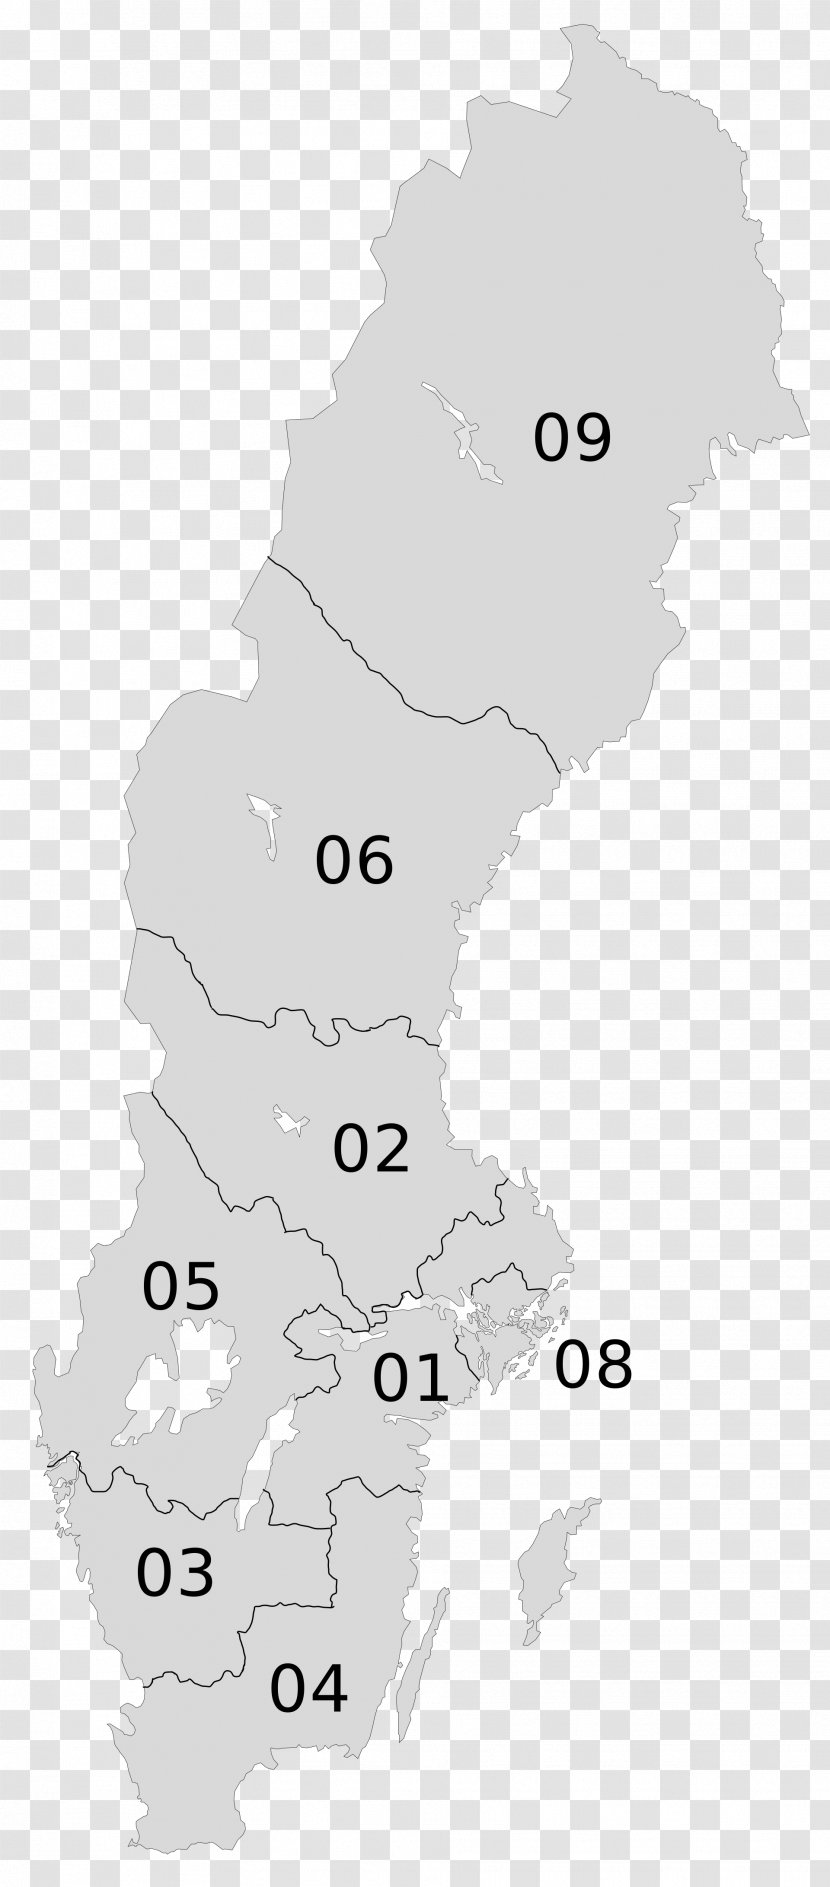 NUTS Statistical Regions Of Sweden Lands Swedish Nomenclature Territorial Units For Statistics East - Numerical Digit Transparent PNG